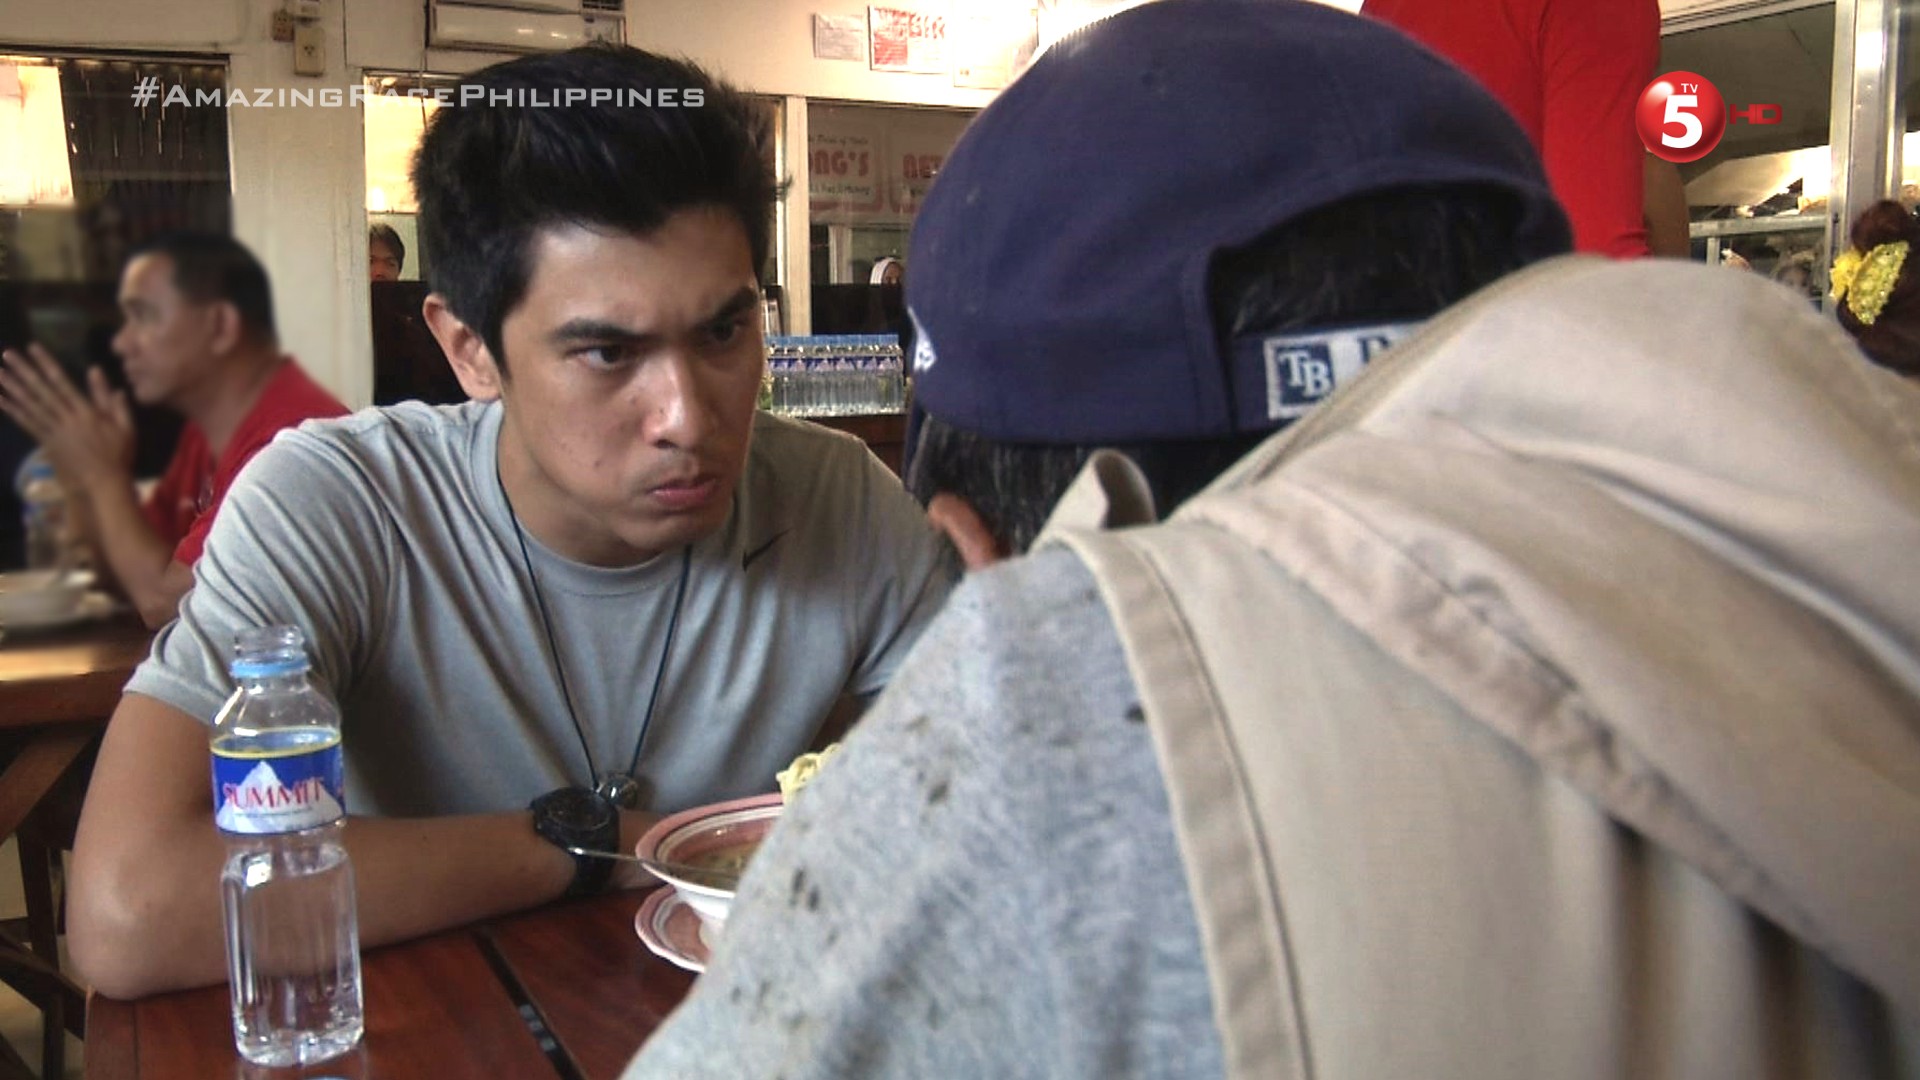 Recap: The Amazing Race Philippines 2, Episode 44 (Leg 8, Day 2) – "Wag gagawin ang pagkakamaling ito!"